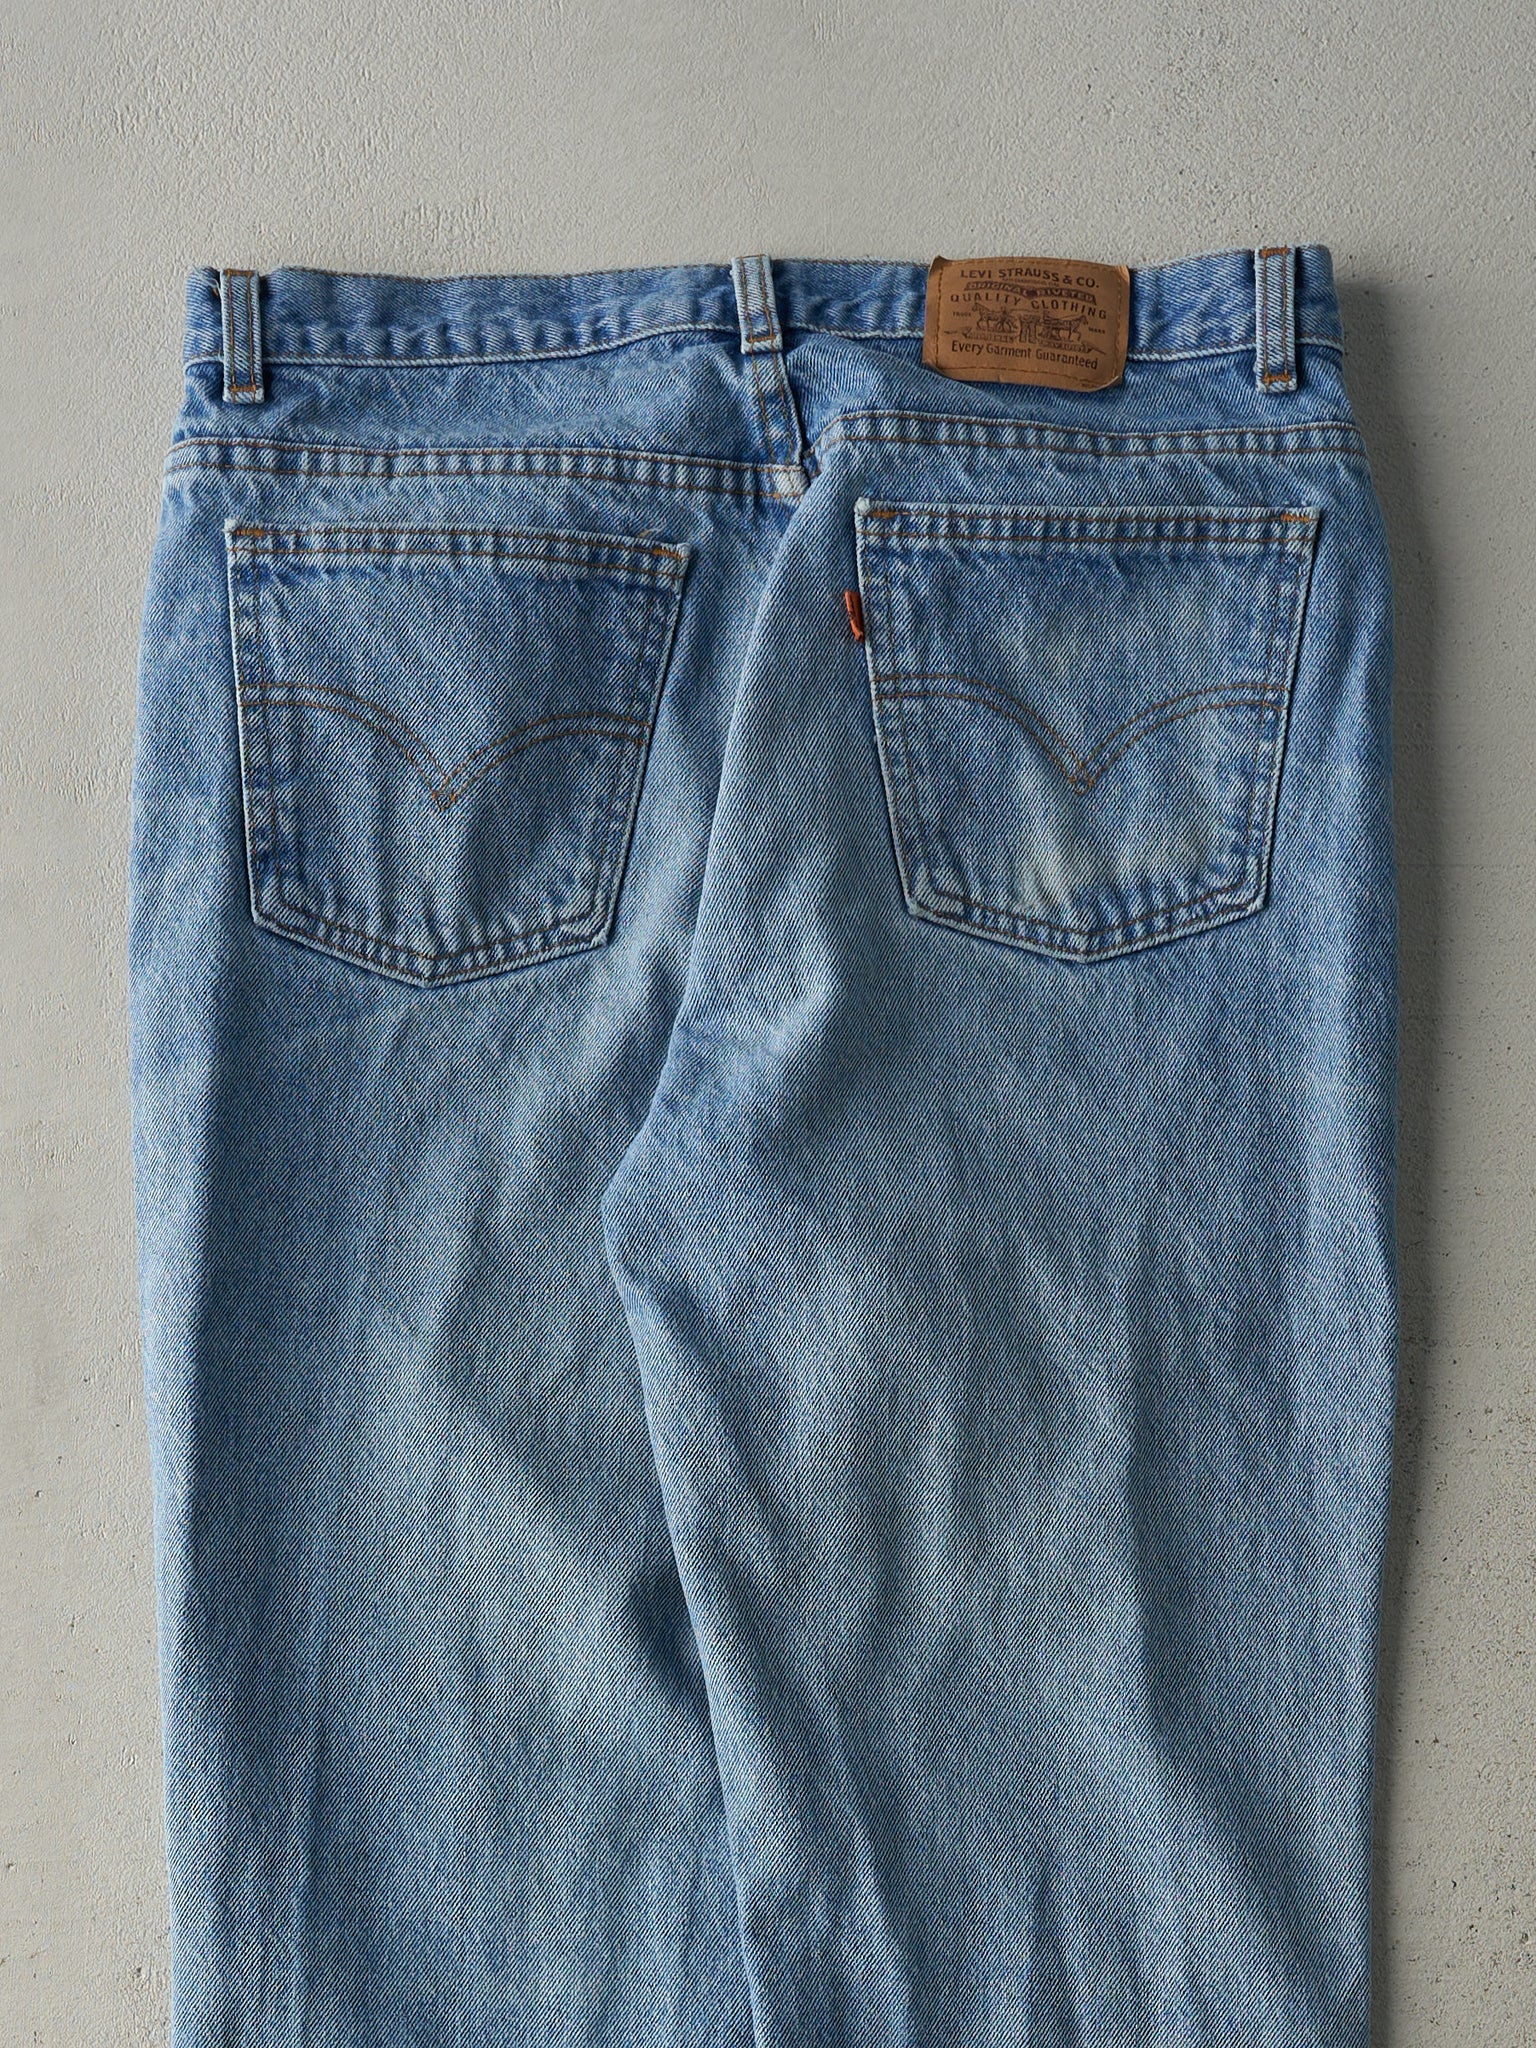 Vintage 80s Light Wash Levi's Orange Tab Jeans (32x31.5)